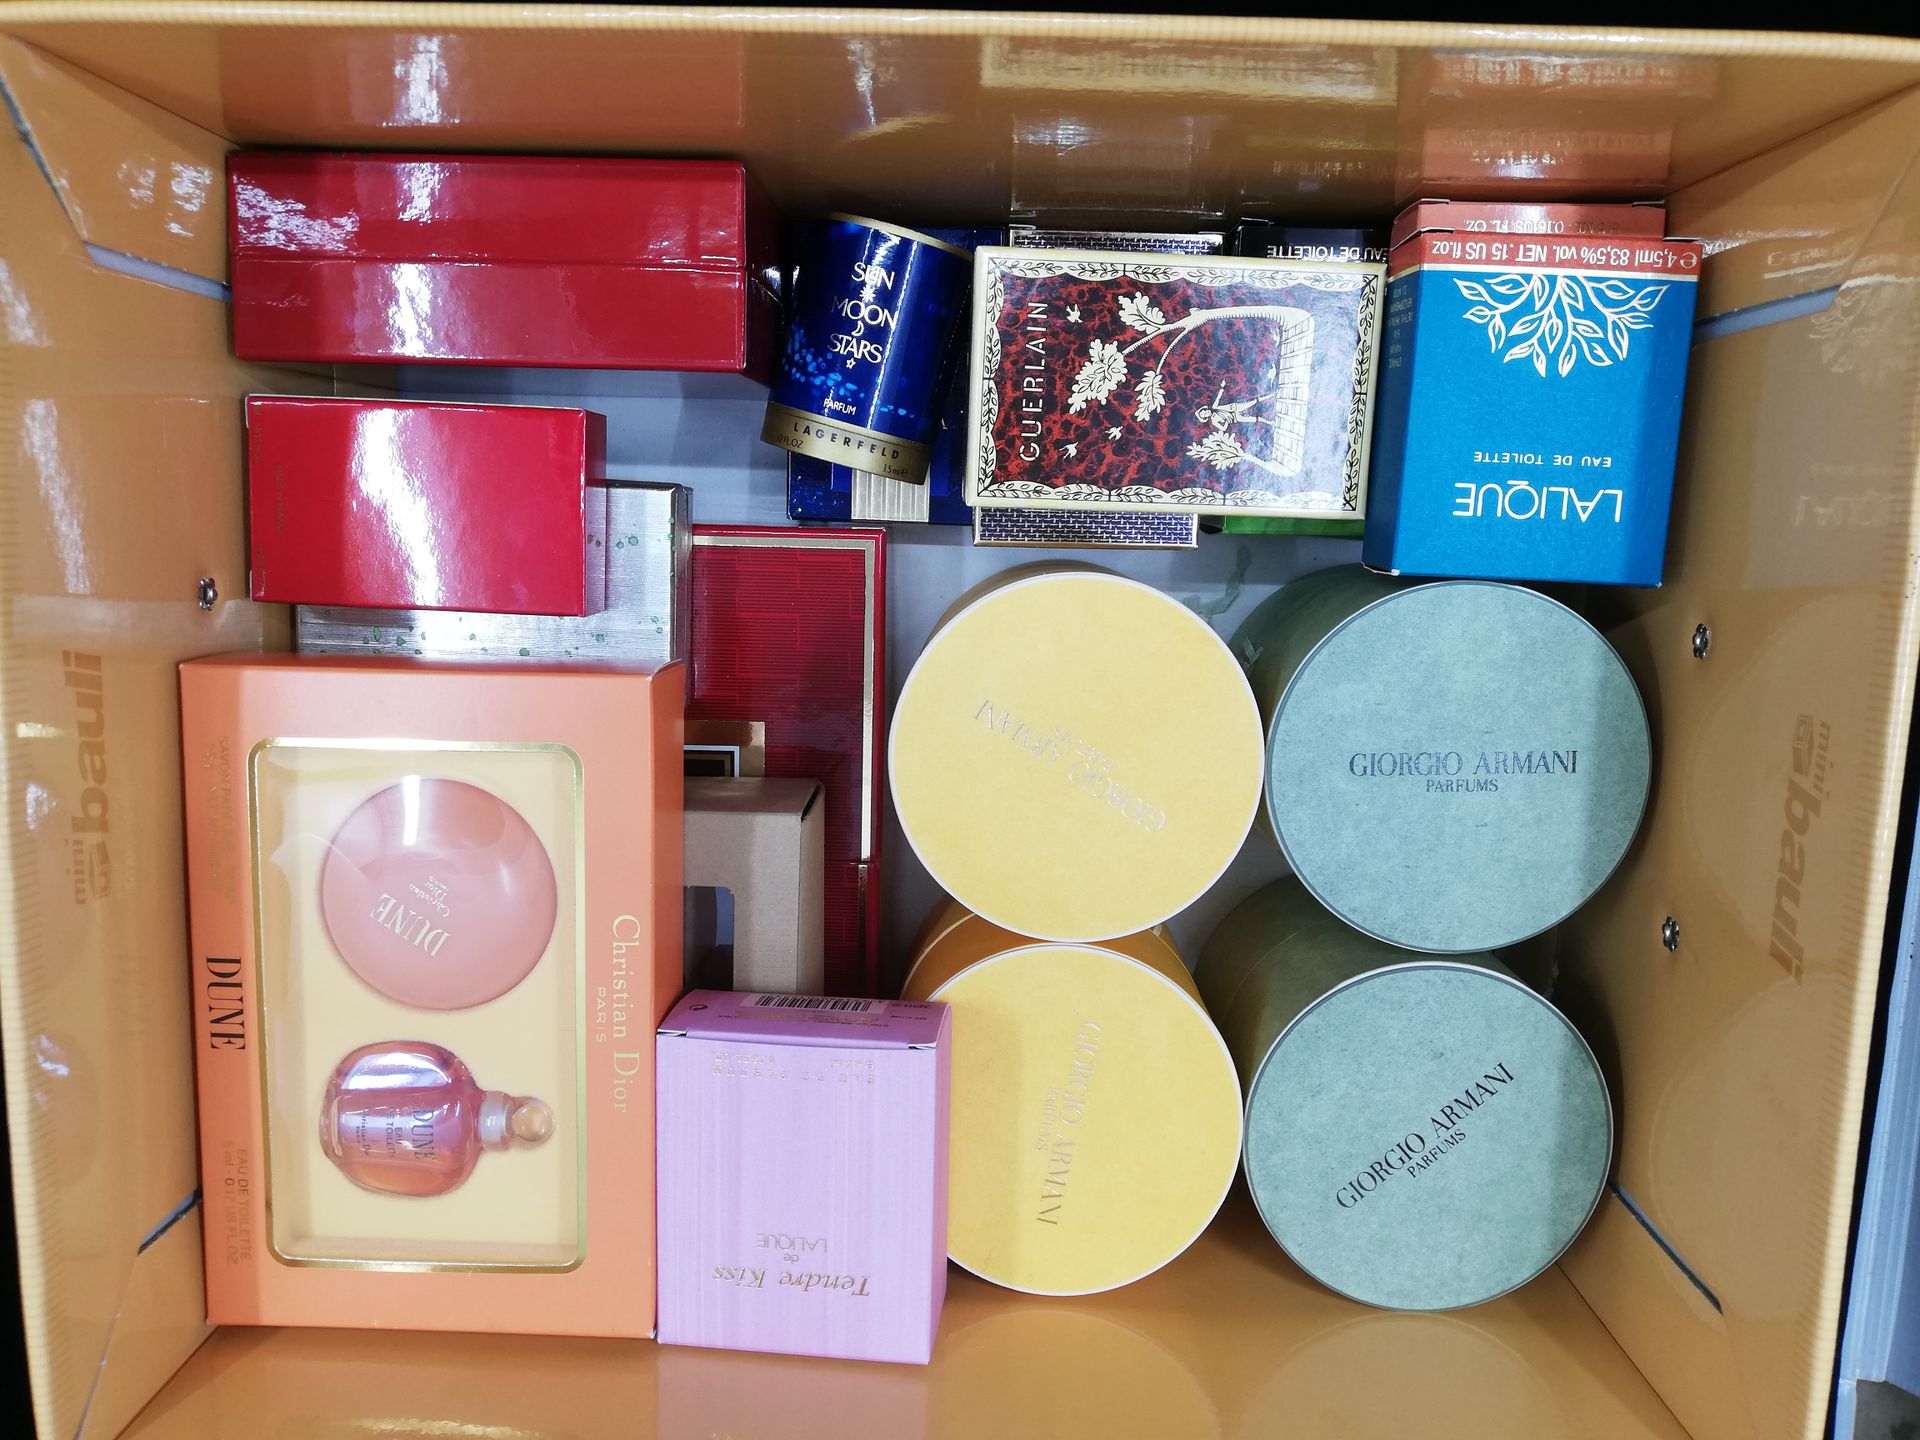 Null 各种香水 - (1990年代)

约有30种小巧的香水和化妆品被装在盒子里，来自Christian Dior, Giorgio Armani, Lal&hellip;